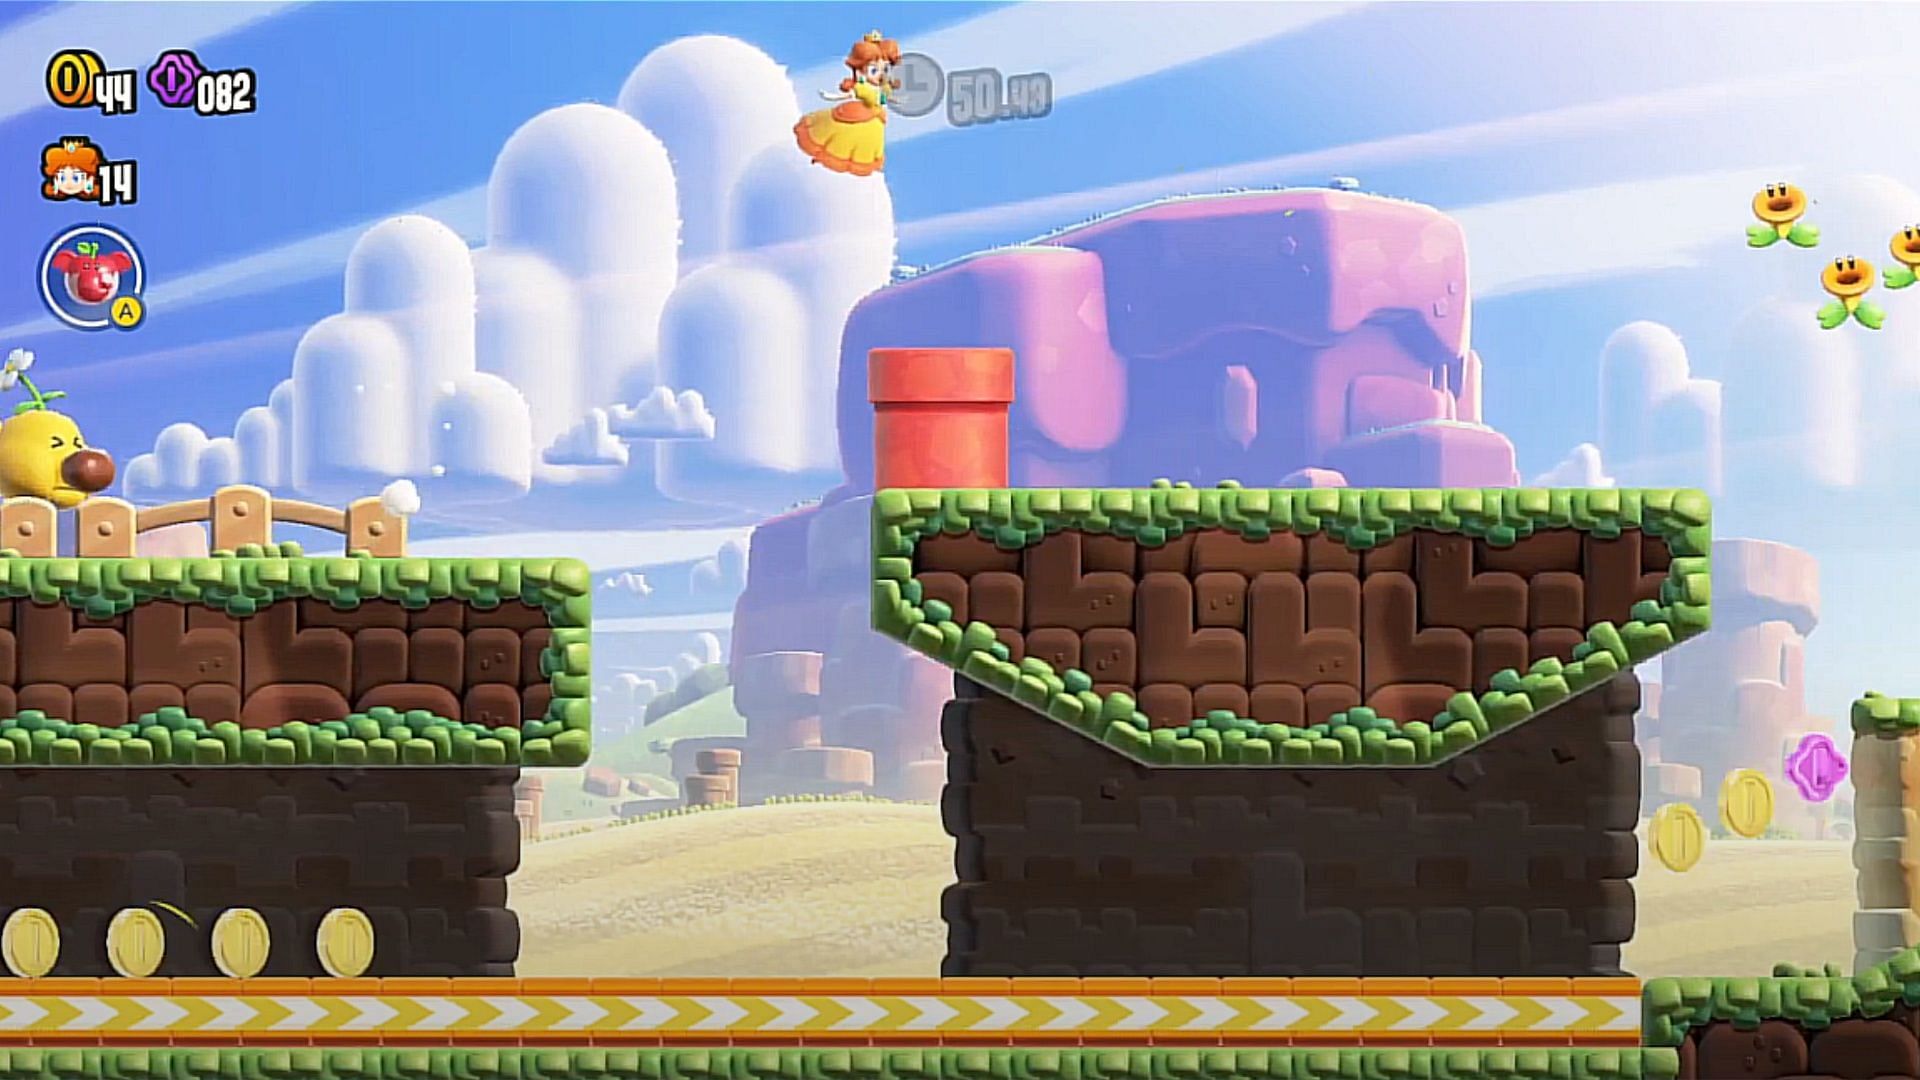 Gotta go fast against Wiggler! (Image via Nintendo)